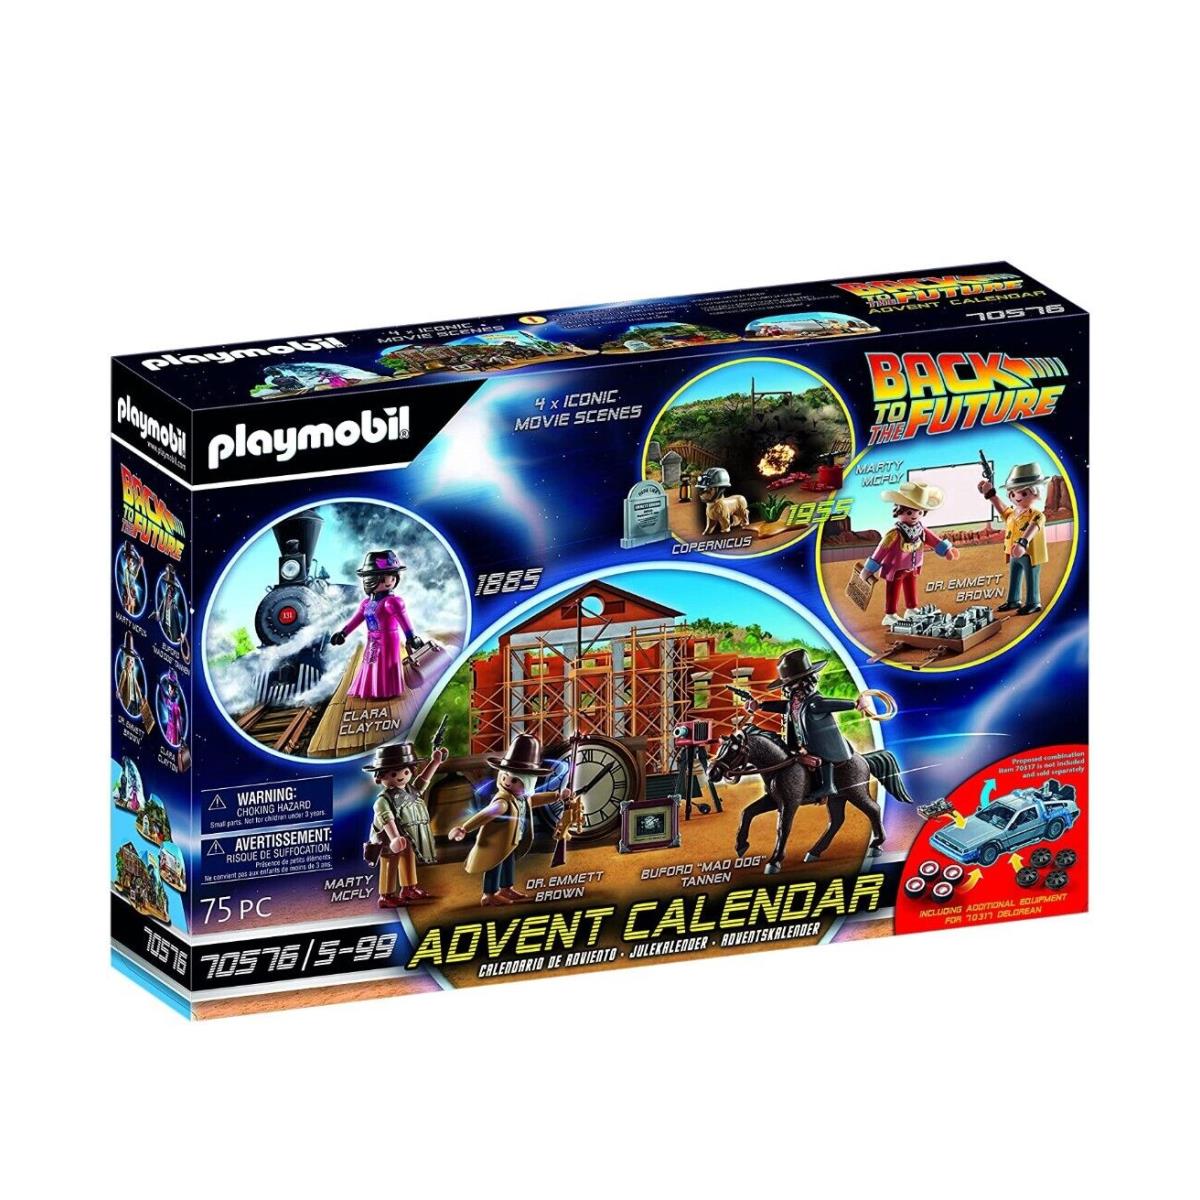 Playmobil Back to The Future Part Iii Advent Calendar 70576 Playset Btf